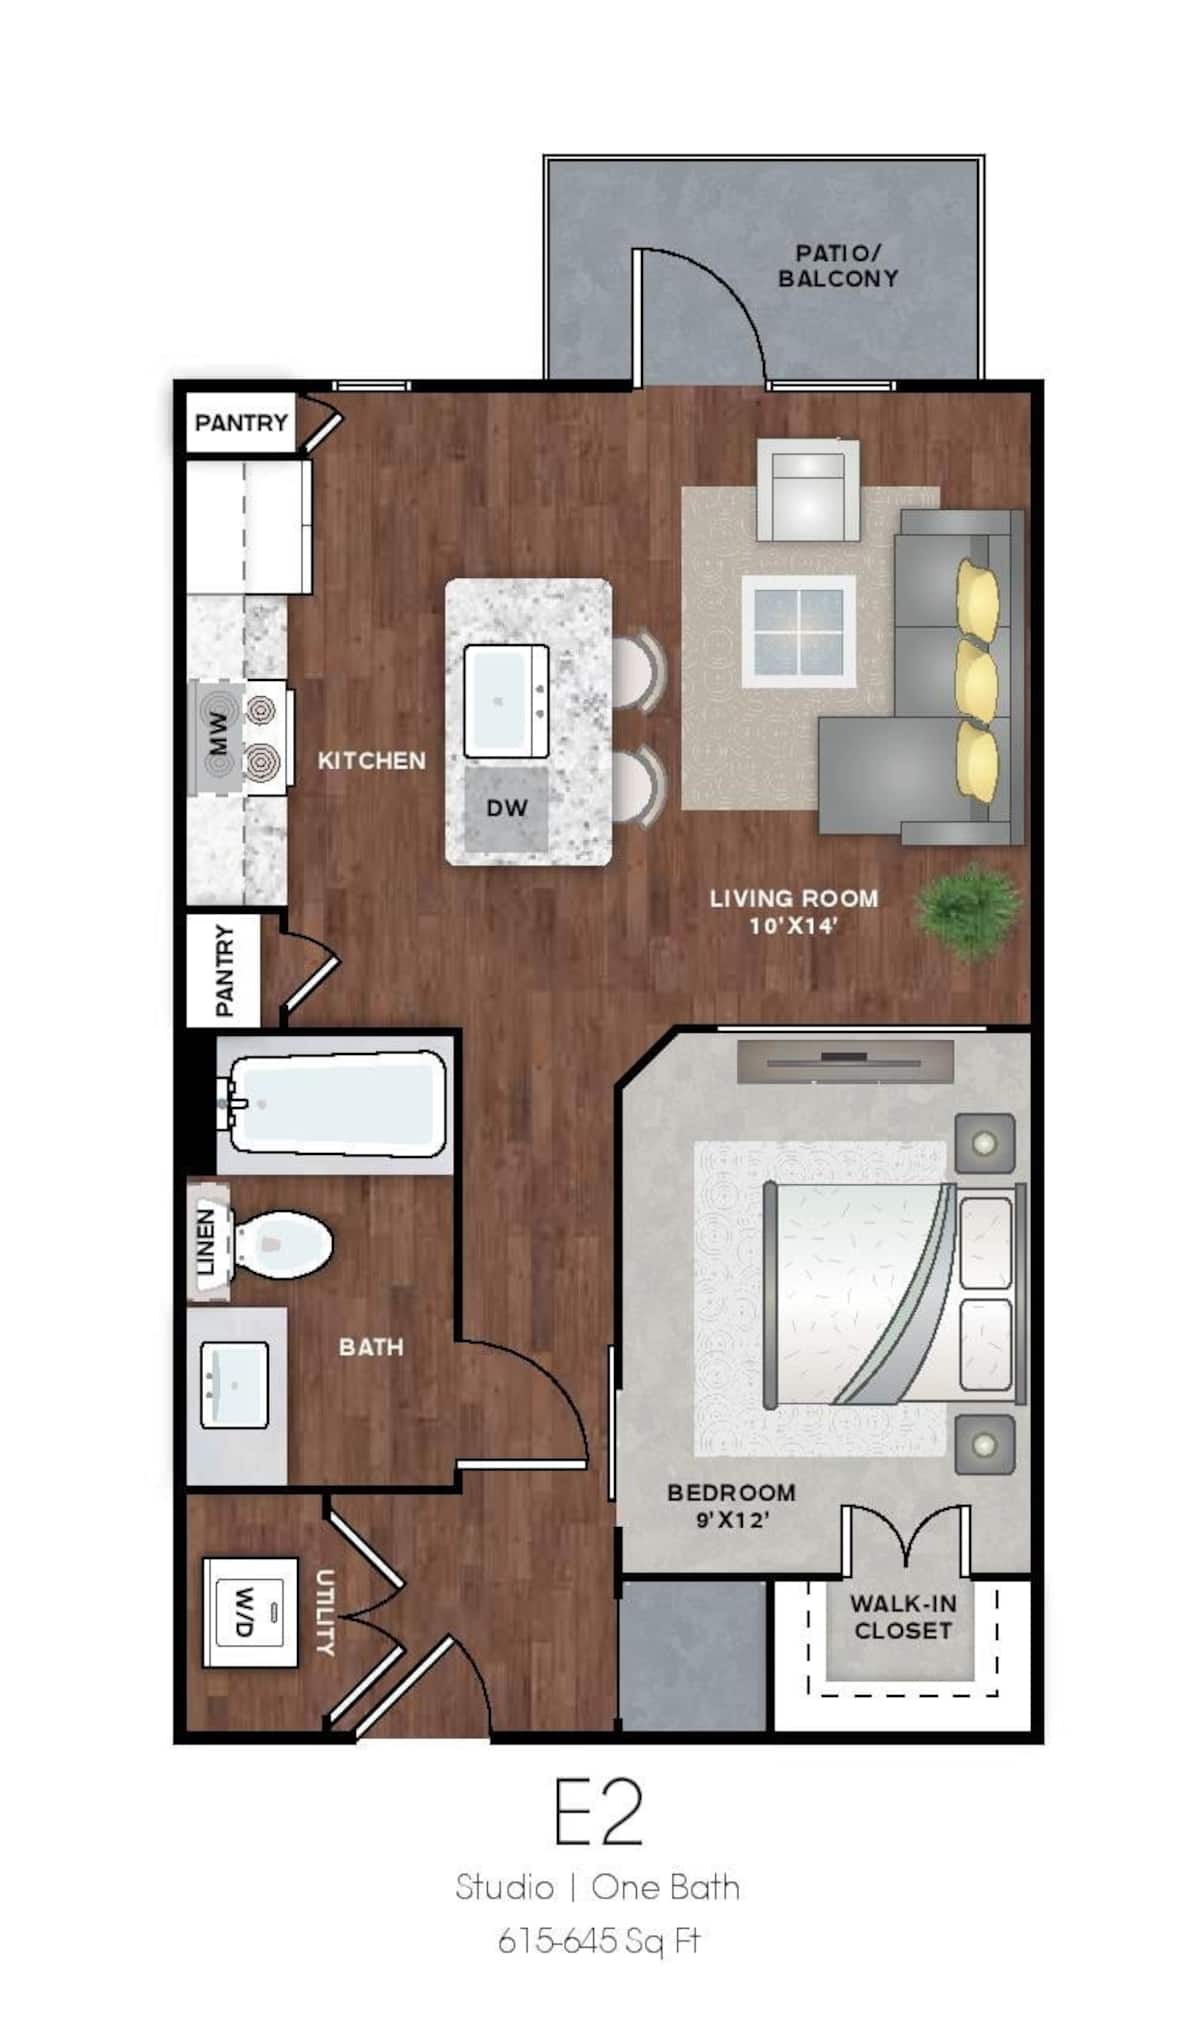 Floorplan diagram for E3, showing 1 bedroom